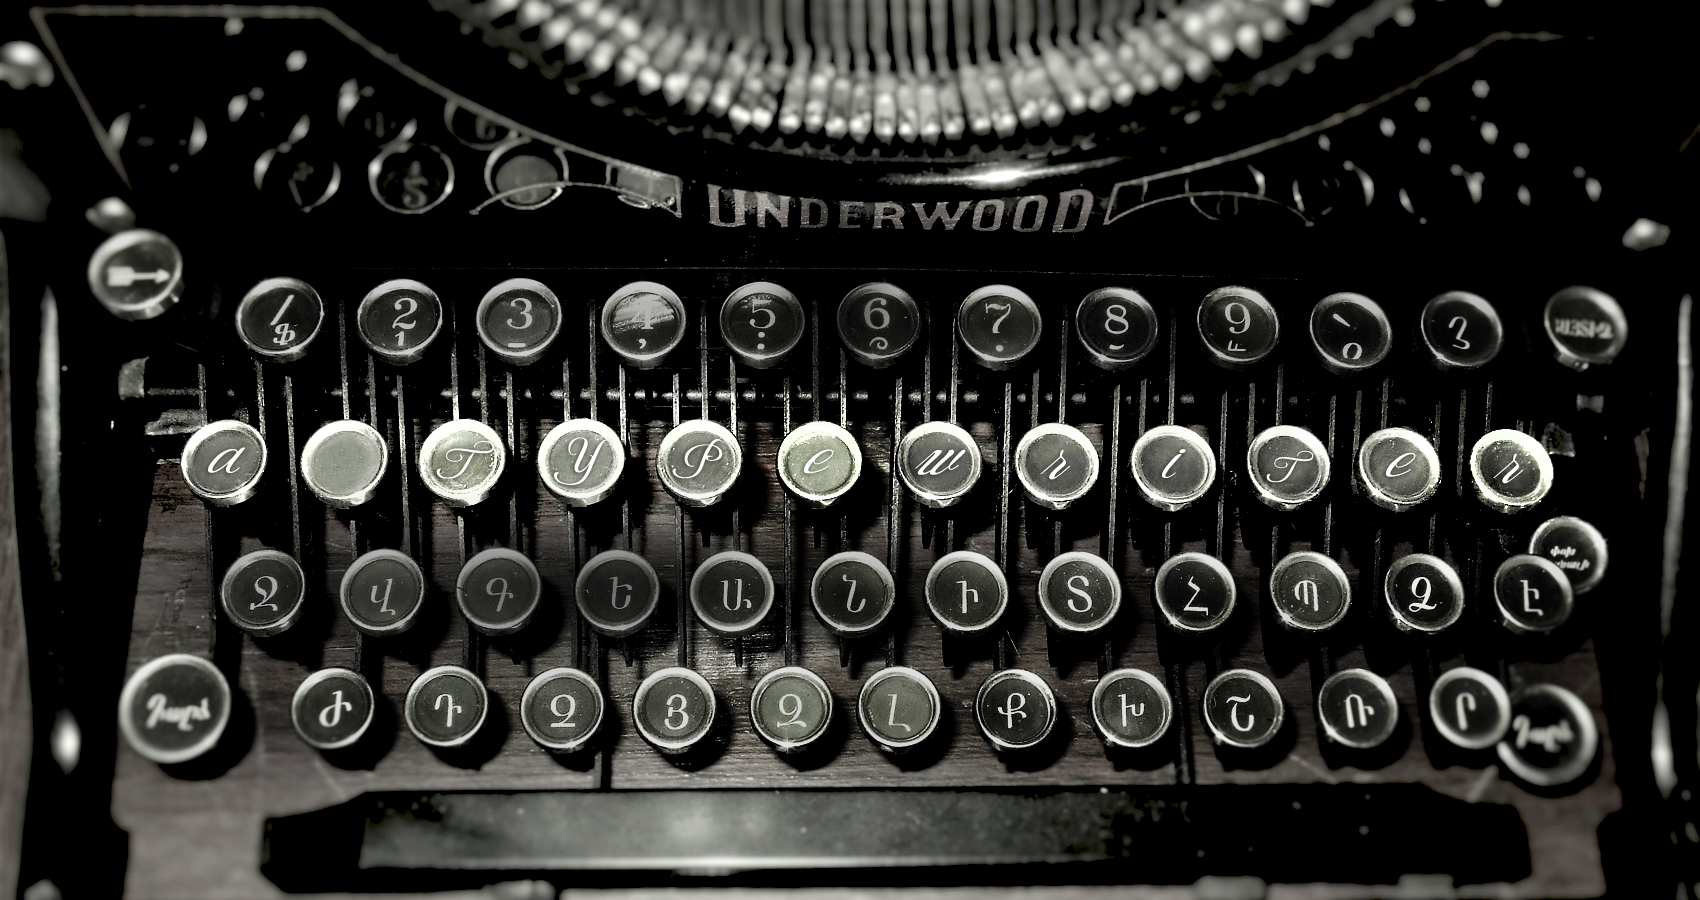 A Typewriter written by Christina Strigas at Spillwords.com